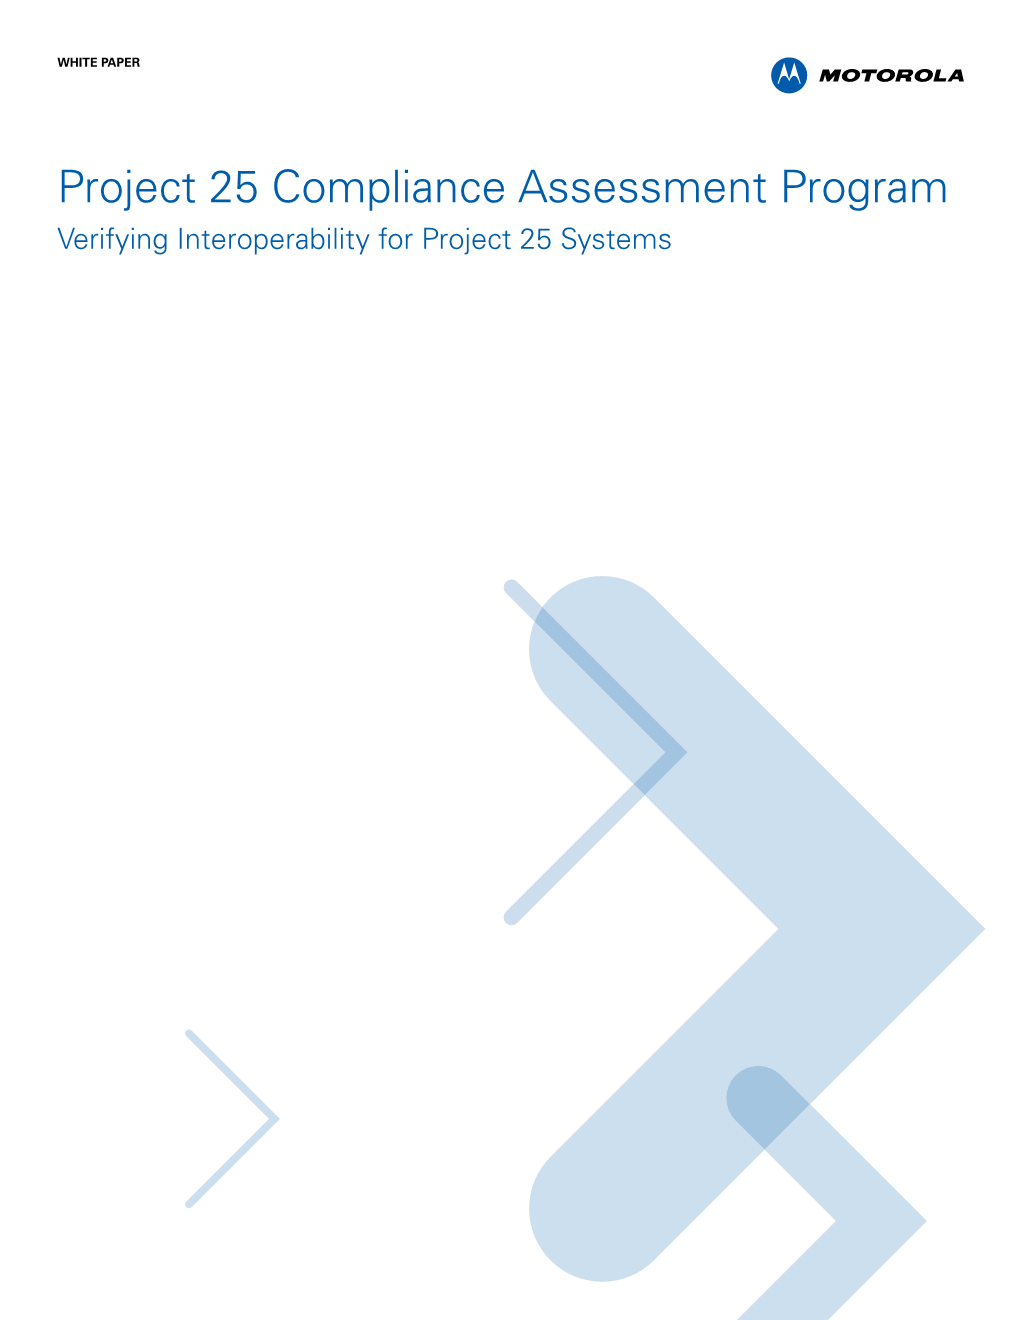 Project 25 Compliance Assessment Program Whitepaper